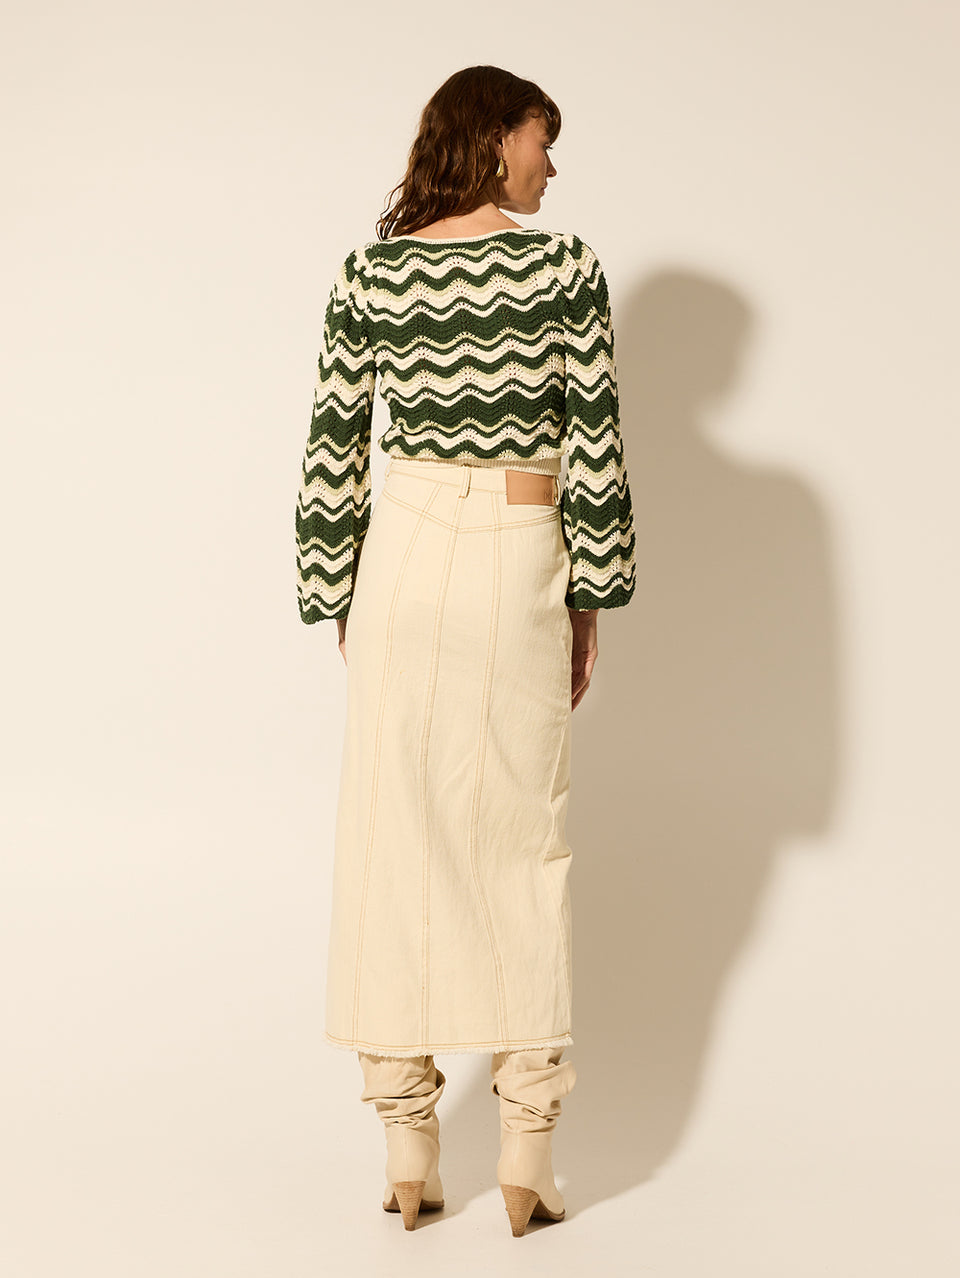 Marcella Knit Top KIVARI | Model wears green and cream knit top back view